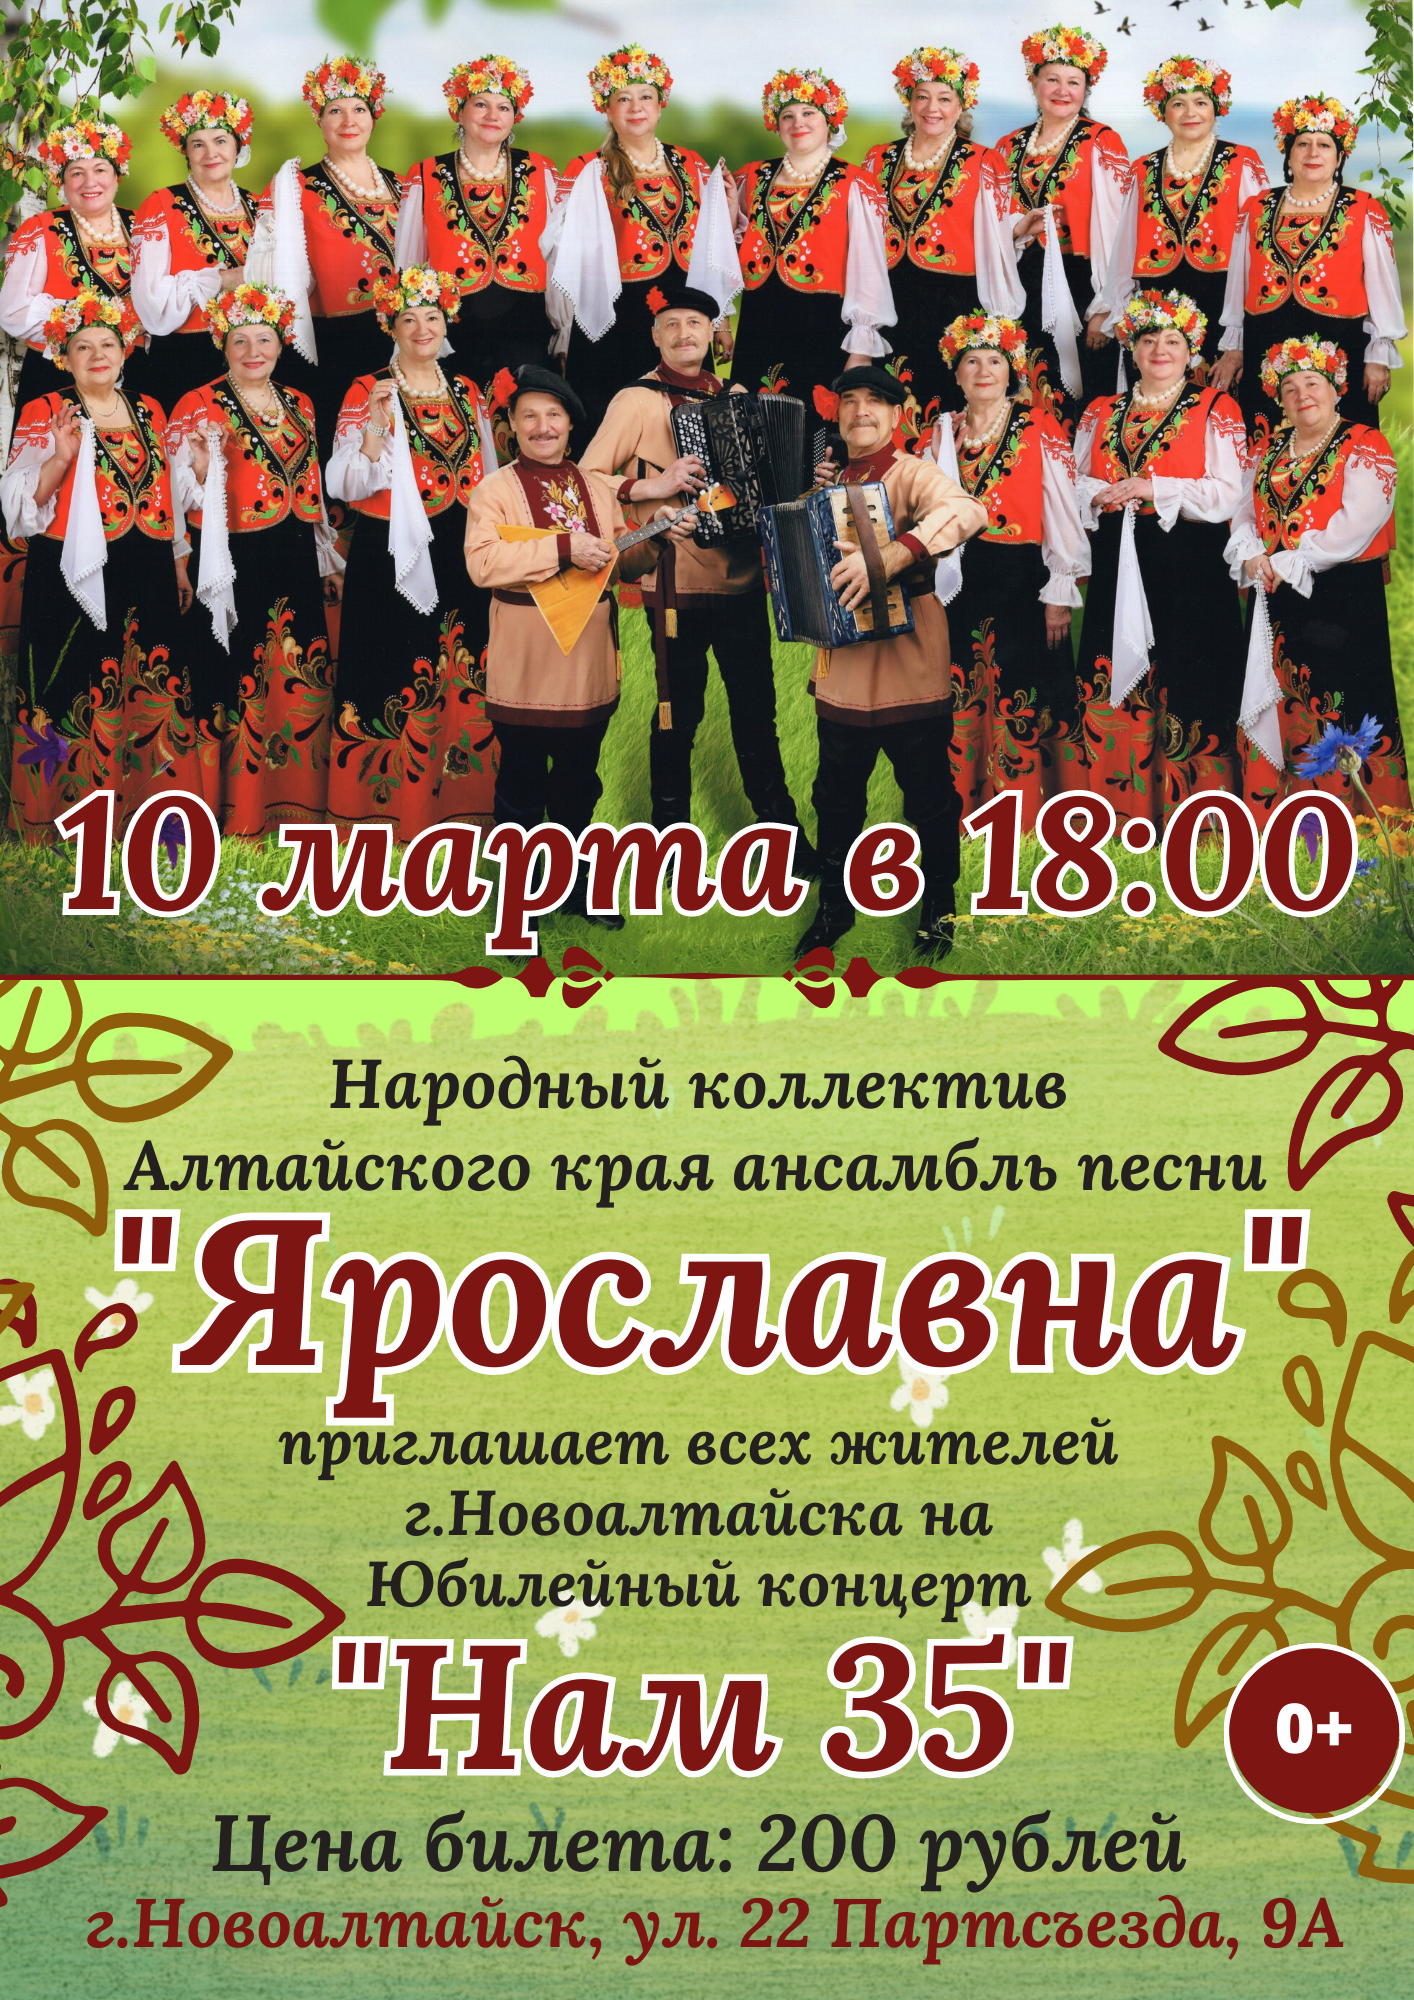 Юбилейный концерт Народного коллектива ансамбля песни «Ярославна»